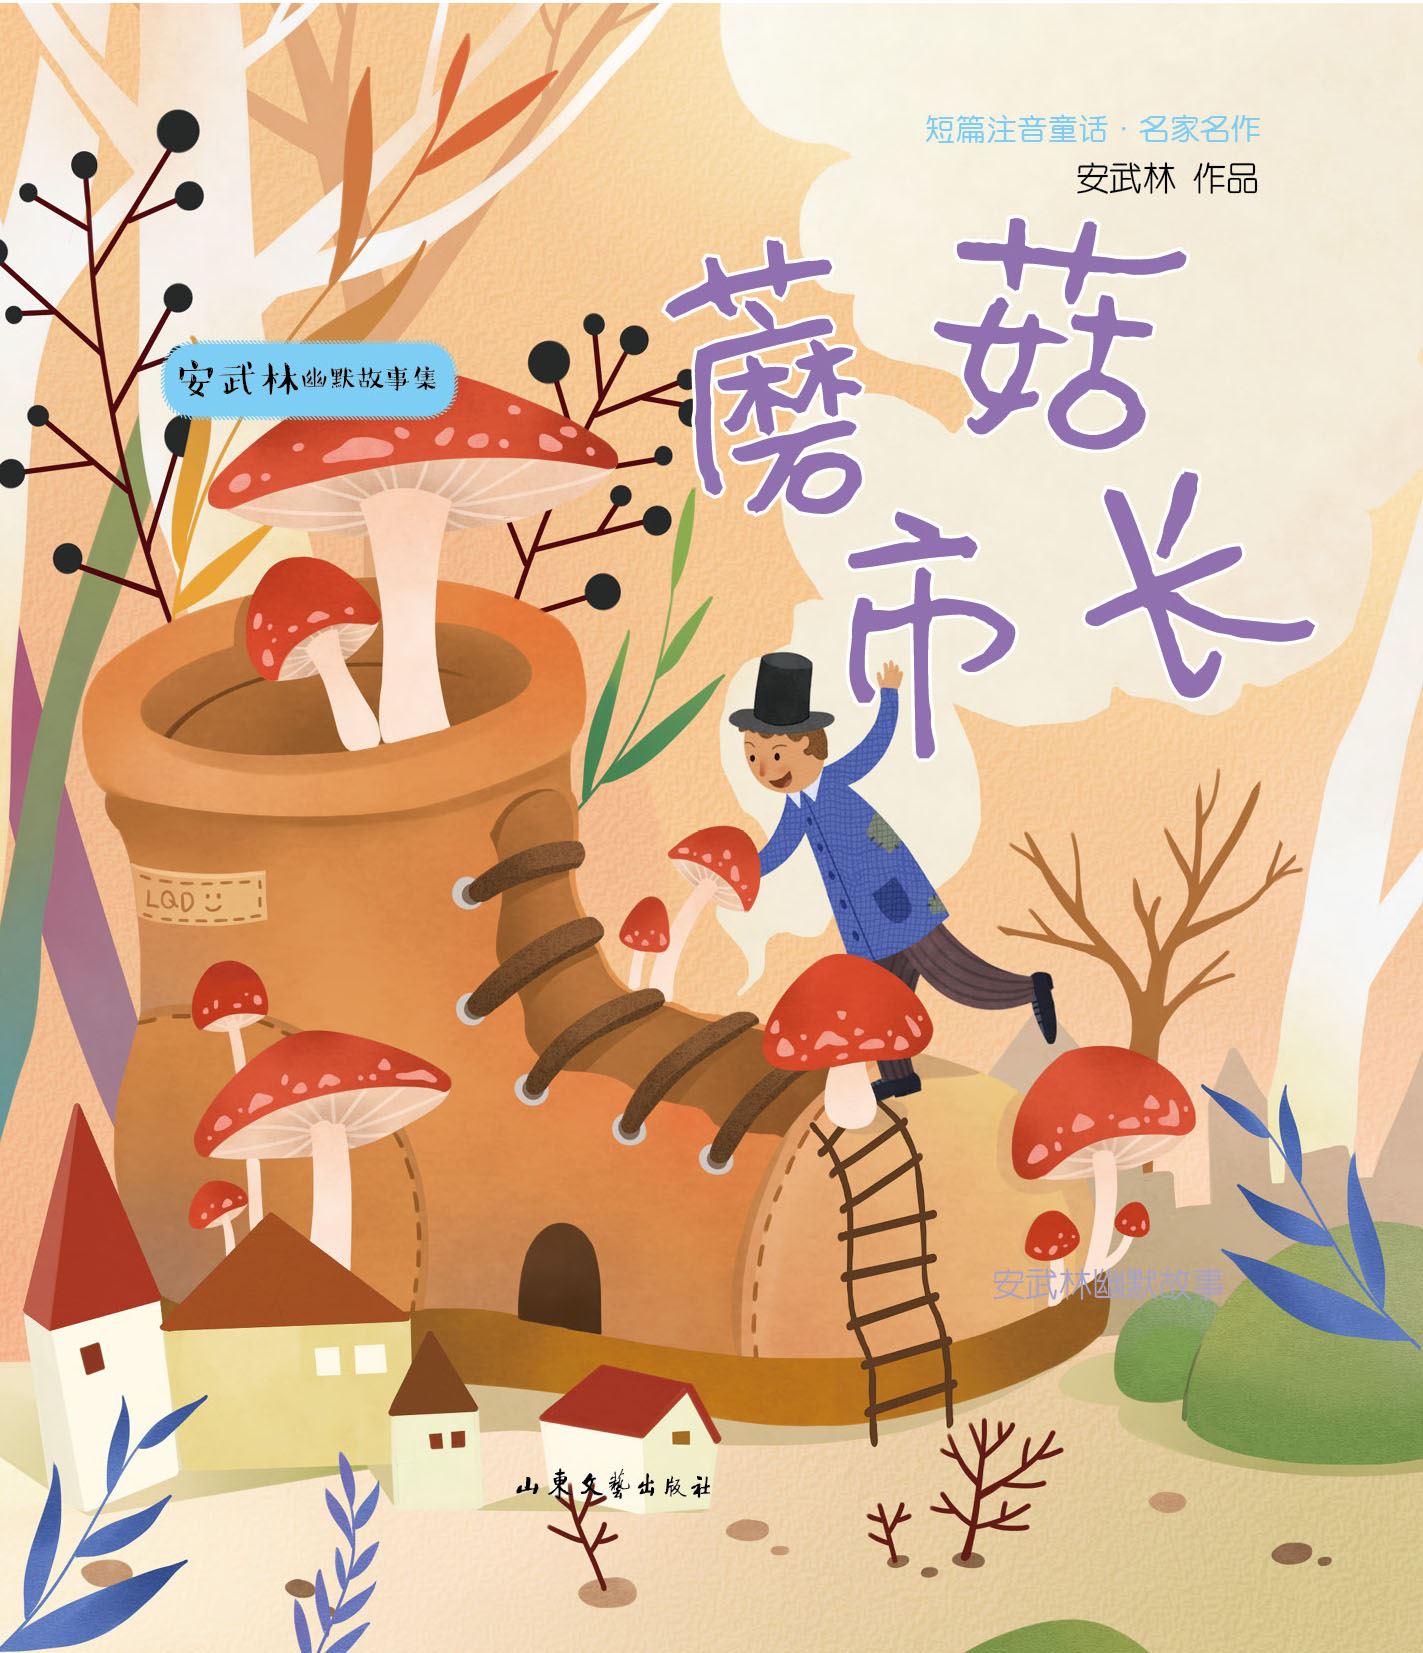 Shandong Literature and Art Publishing House Co., Ltd_Smart Tree Series: The Mayor Mushroom